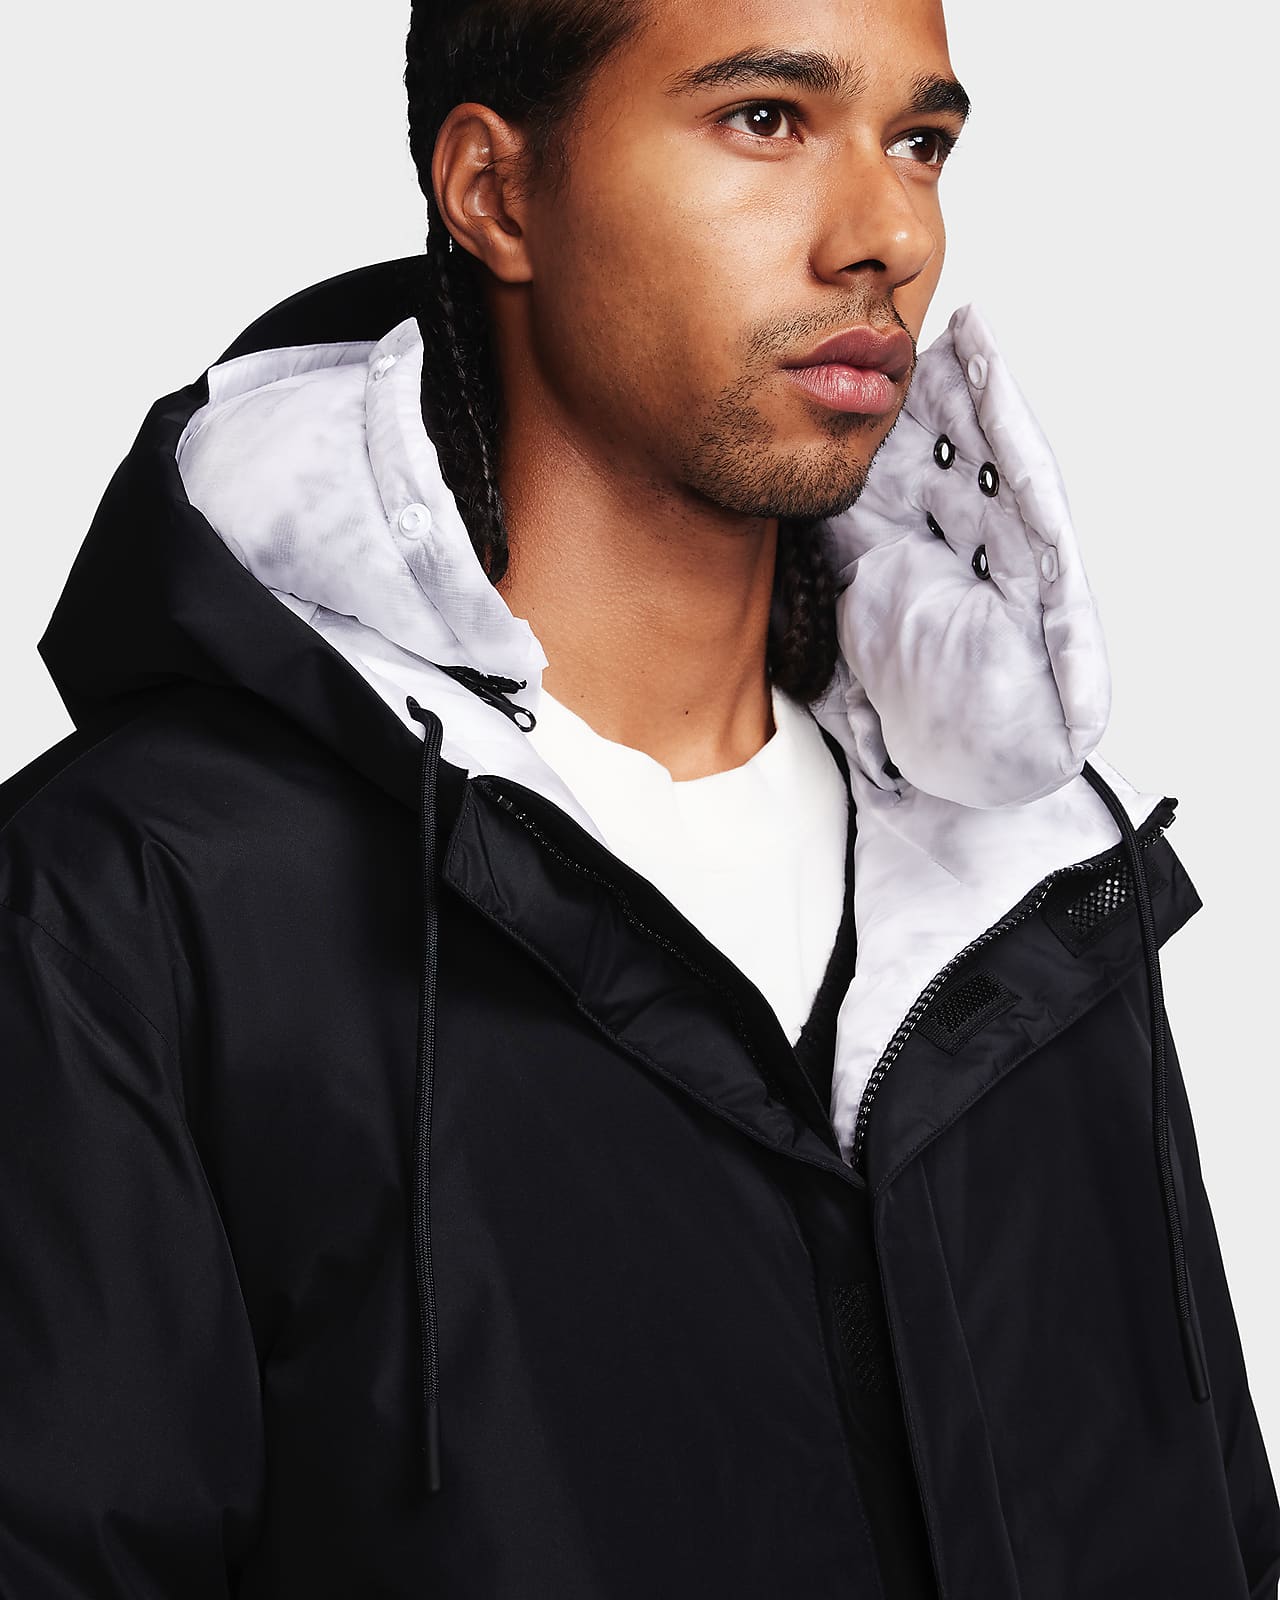 Nike Sportswear GORE-TEX Men's Loose Storm-FIT ADV Hooded Waterproof Jacket